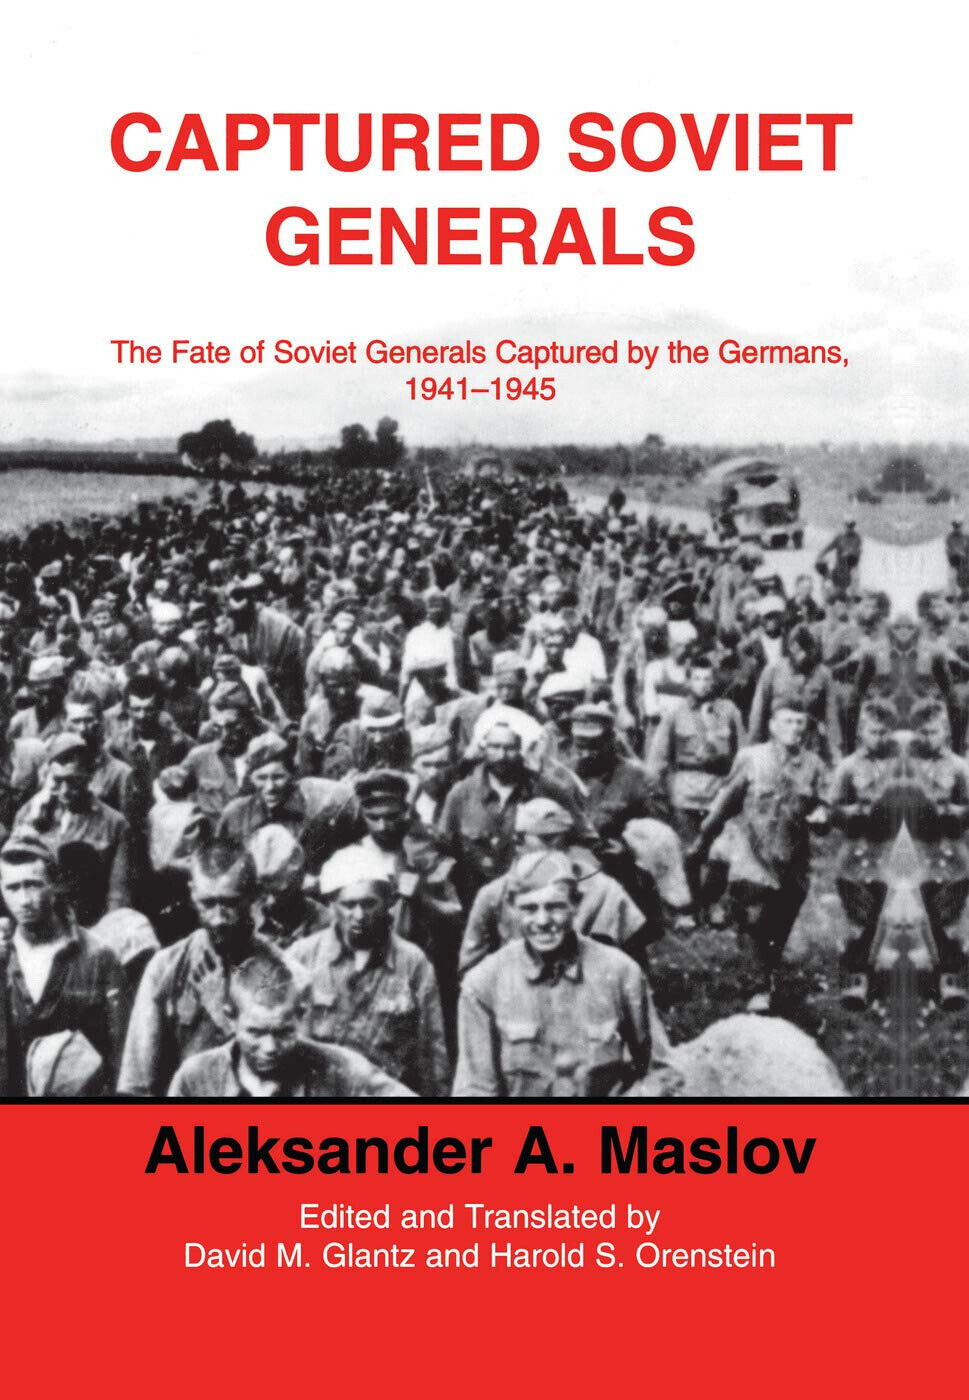 Captured Soviet Generals - A. A. Maslov - ROUTLEDGE, 2014 libro usato